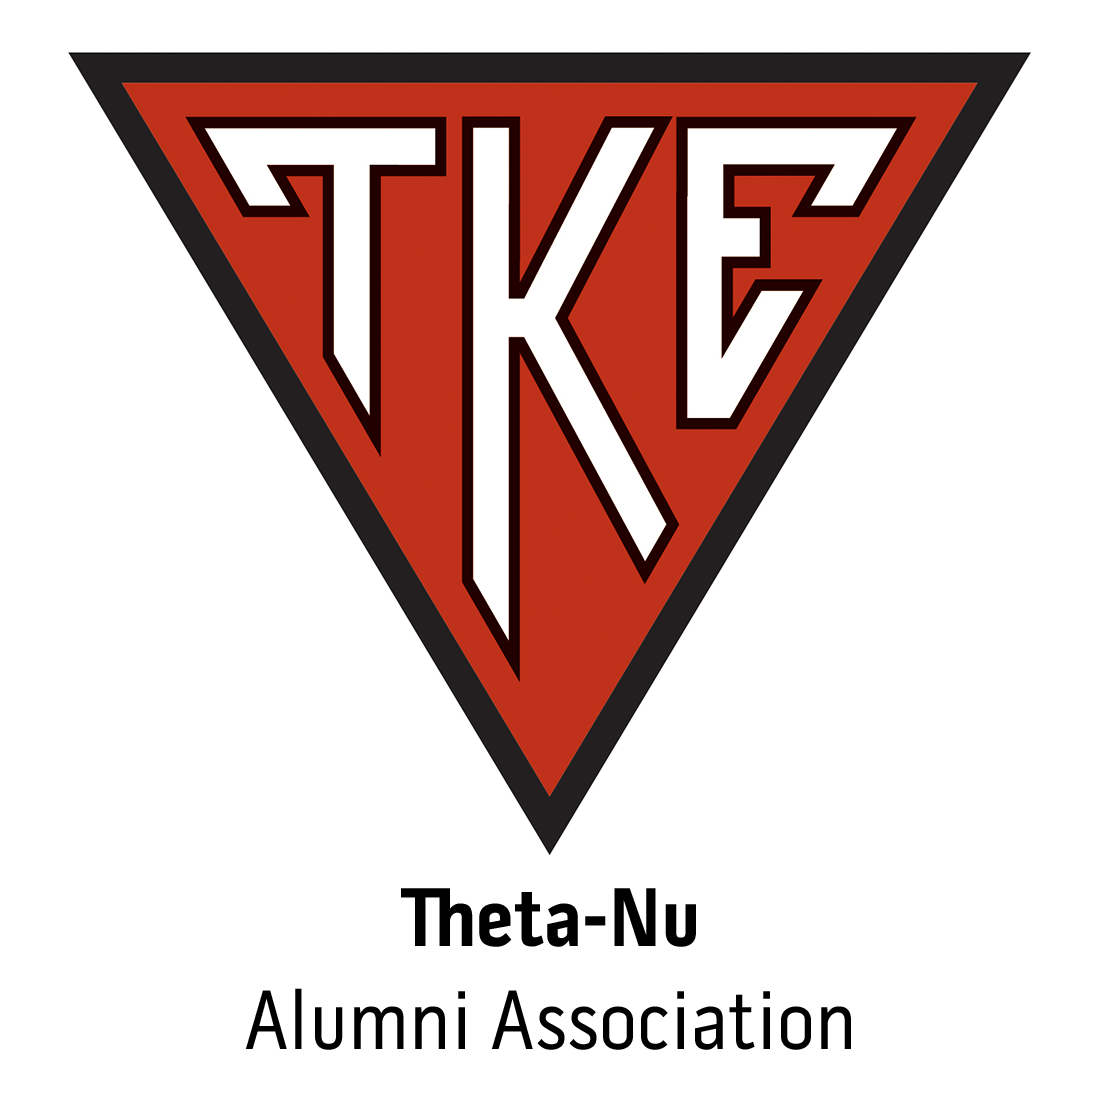 Theta-Nu Alumni Association at Southeastern Louisiana University